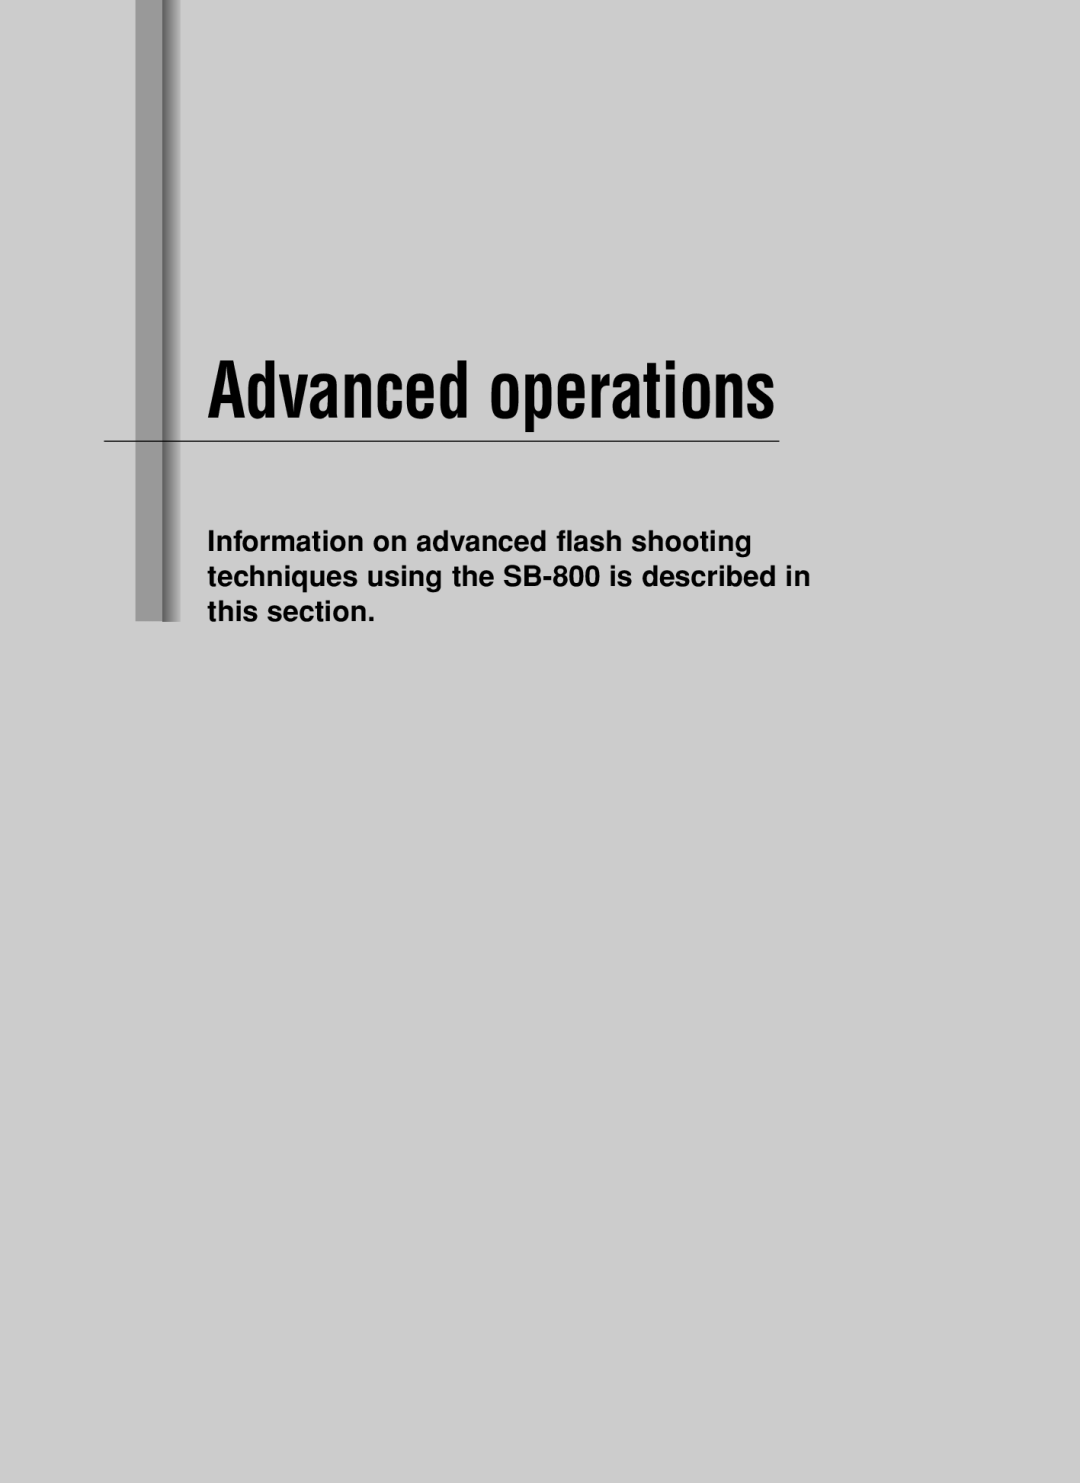 Nikon SB-800 instruction manual Advanced operations 